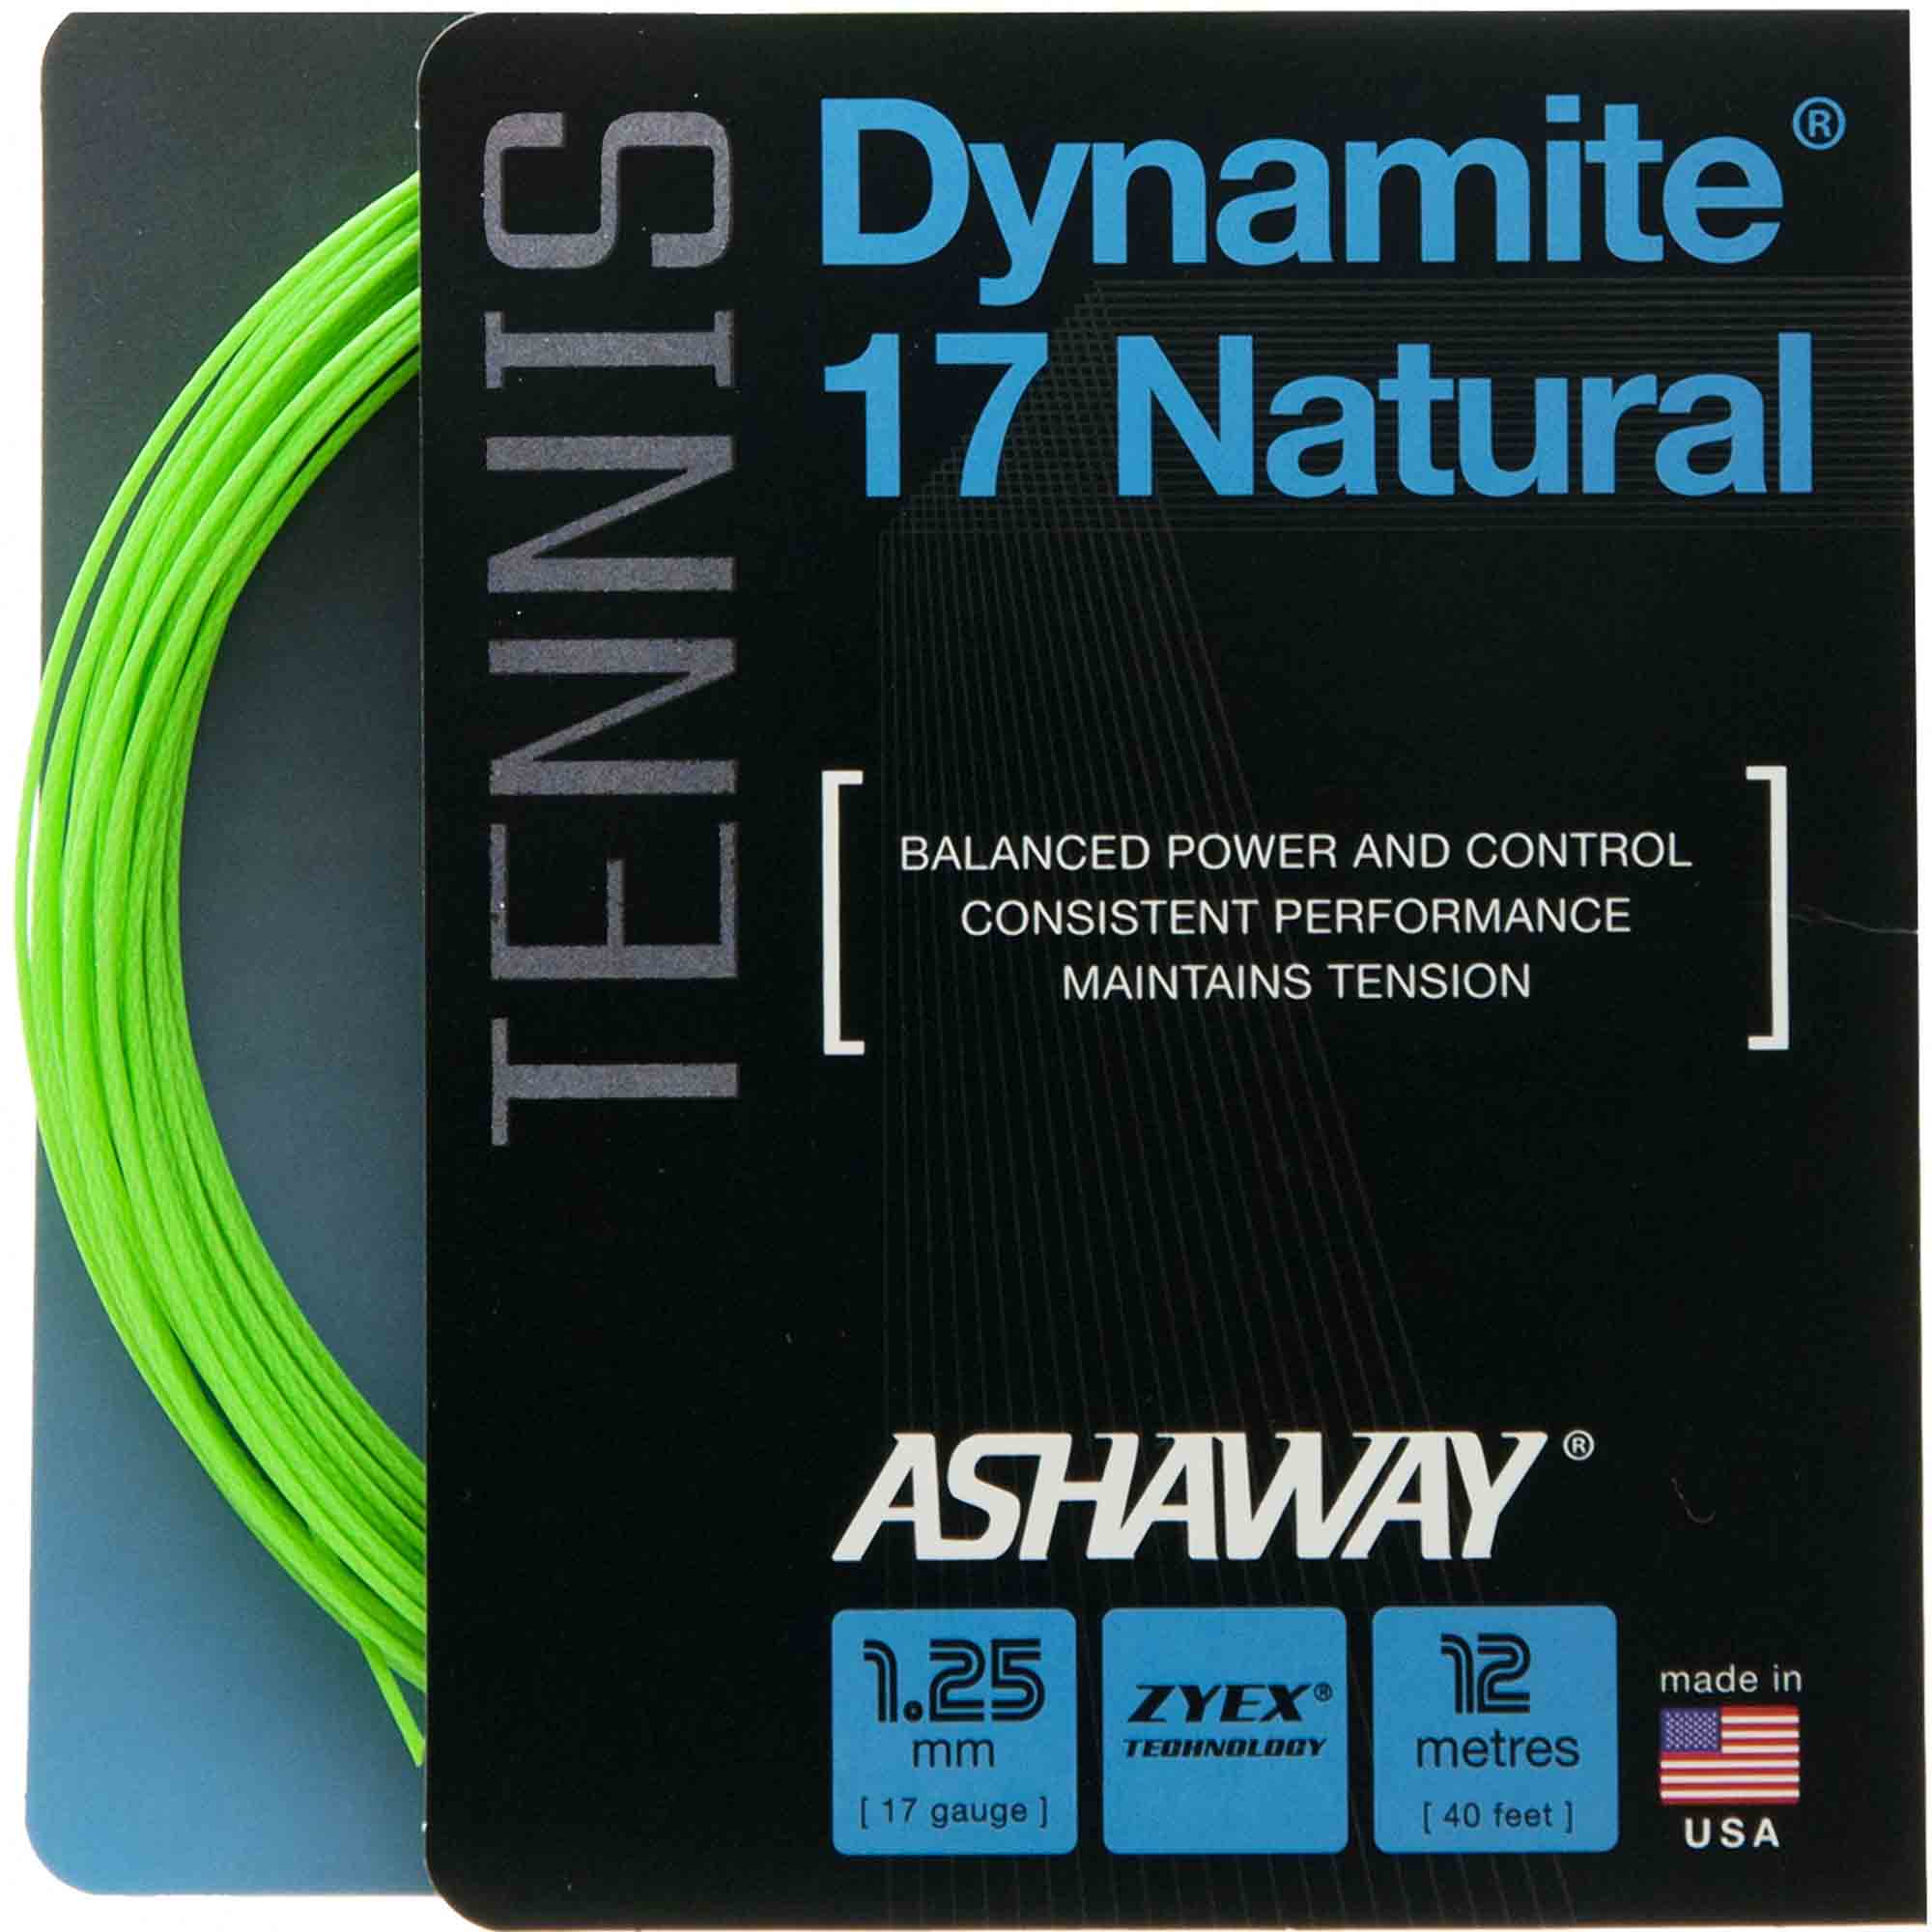 Ashaway Dynamite 17 Soft Tennis String - 12m Set